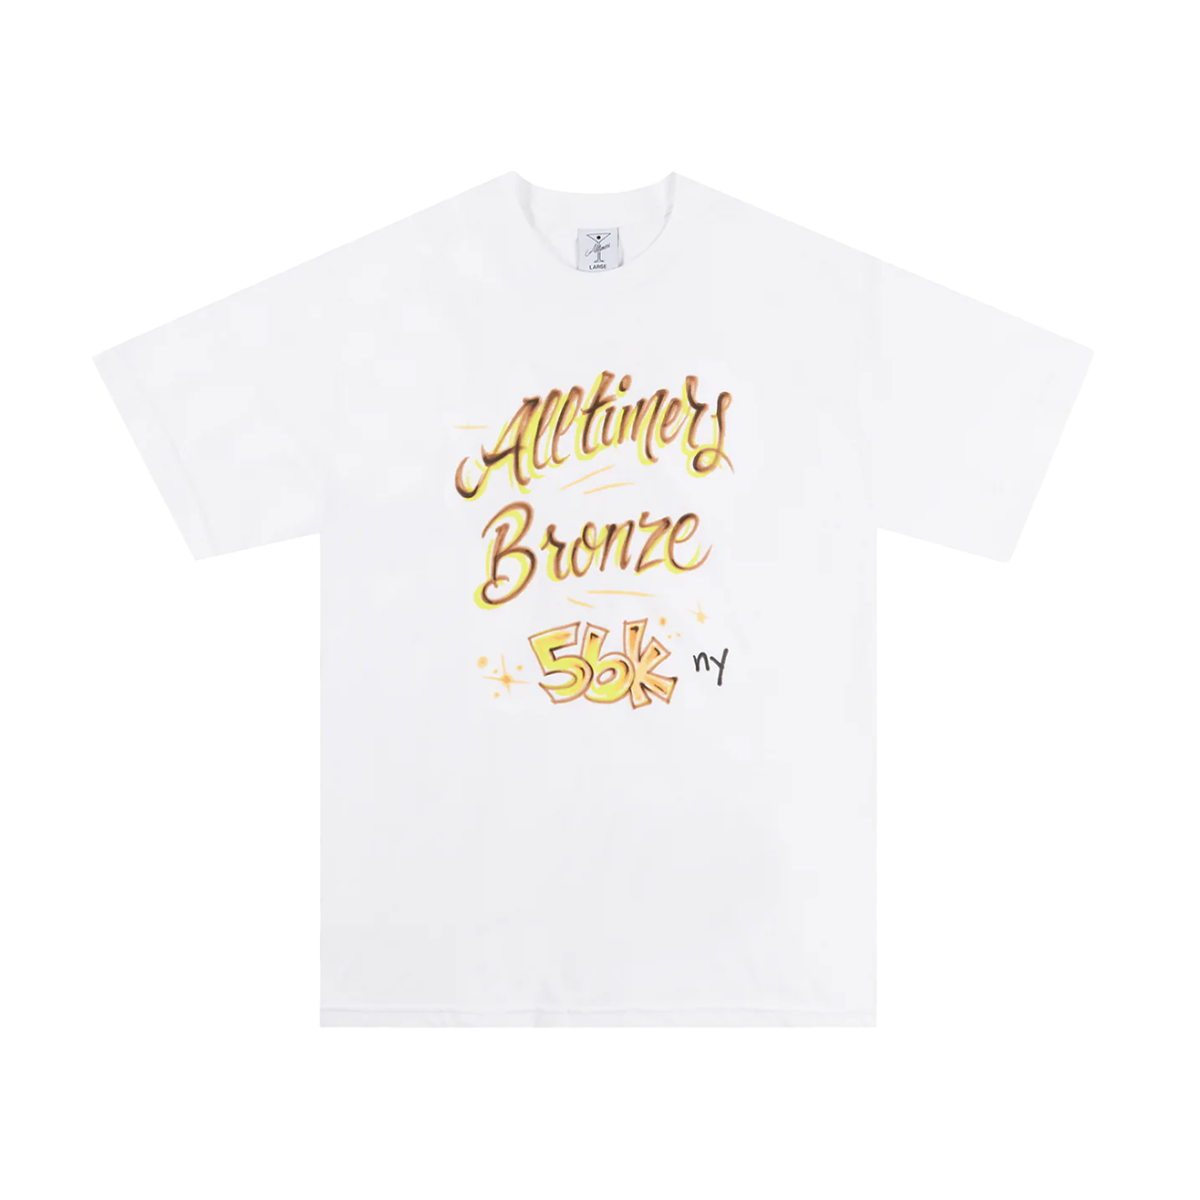 Alltimers X Bronze56k 56K Lounge T-Shirt - White